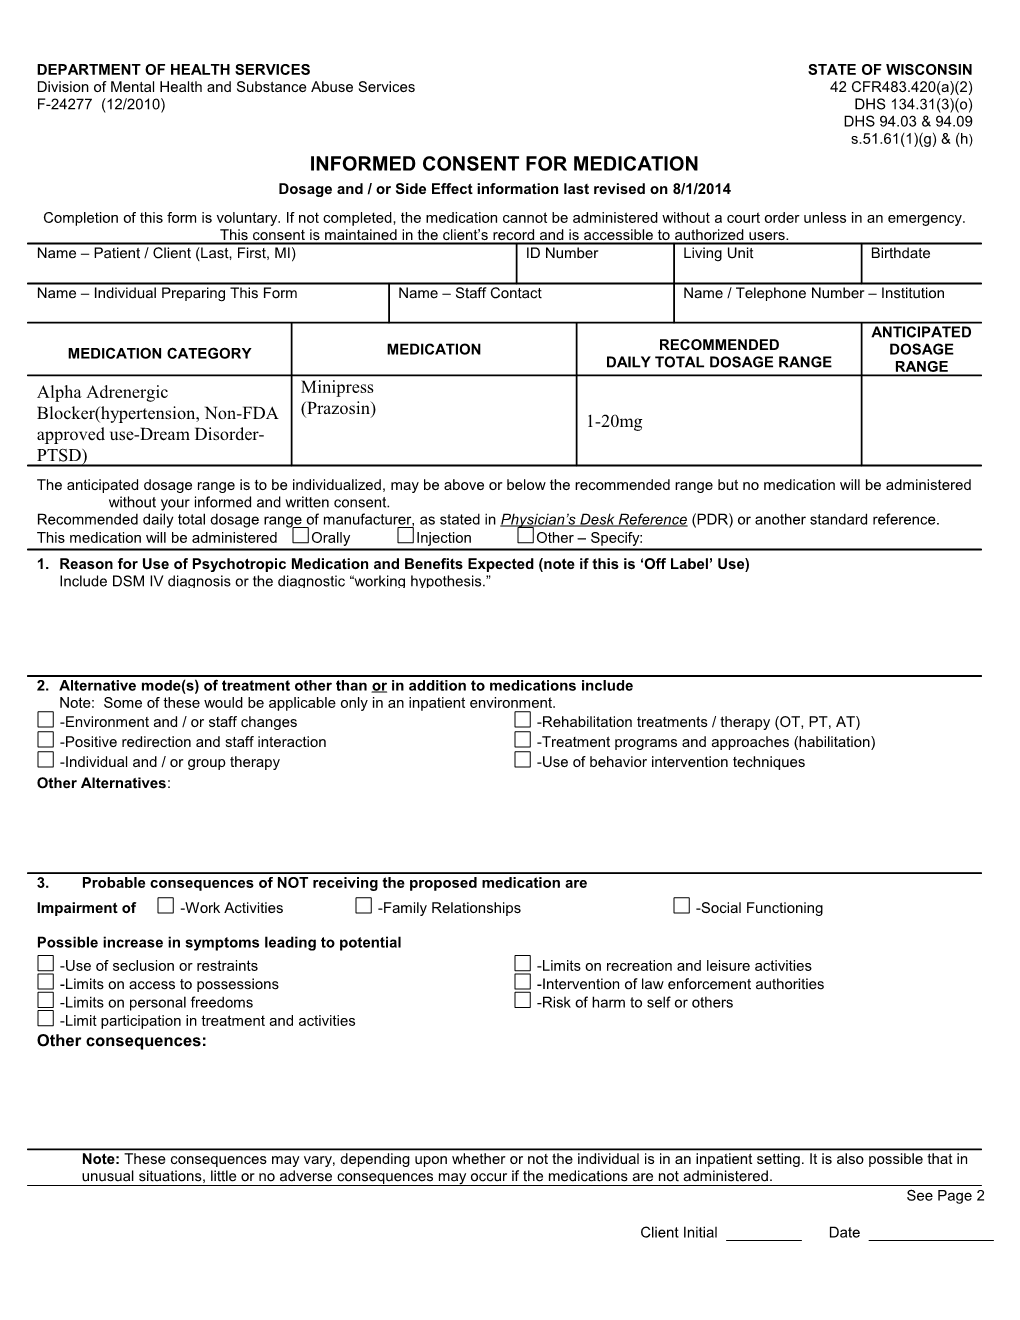 Informed Consent for Medication, F-24277, Prazosin